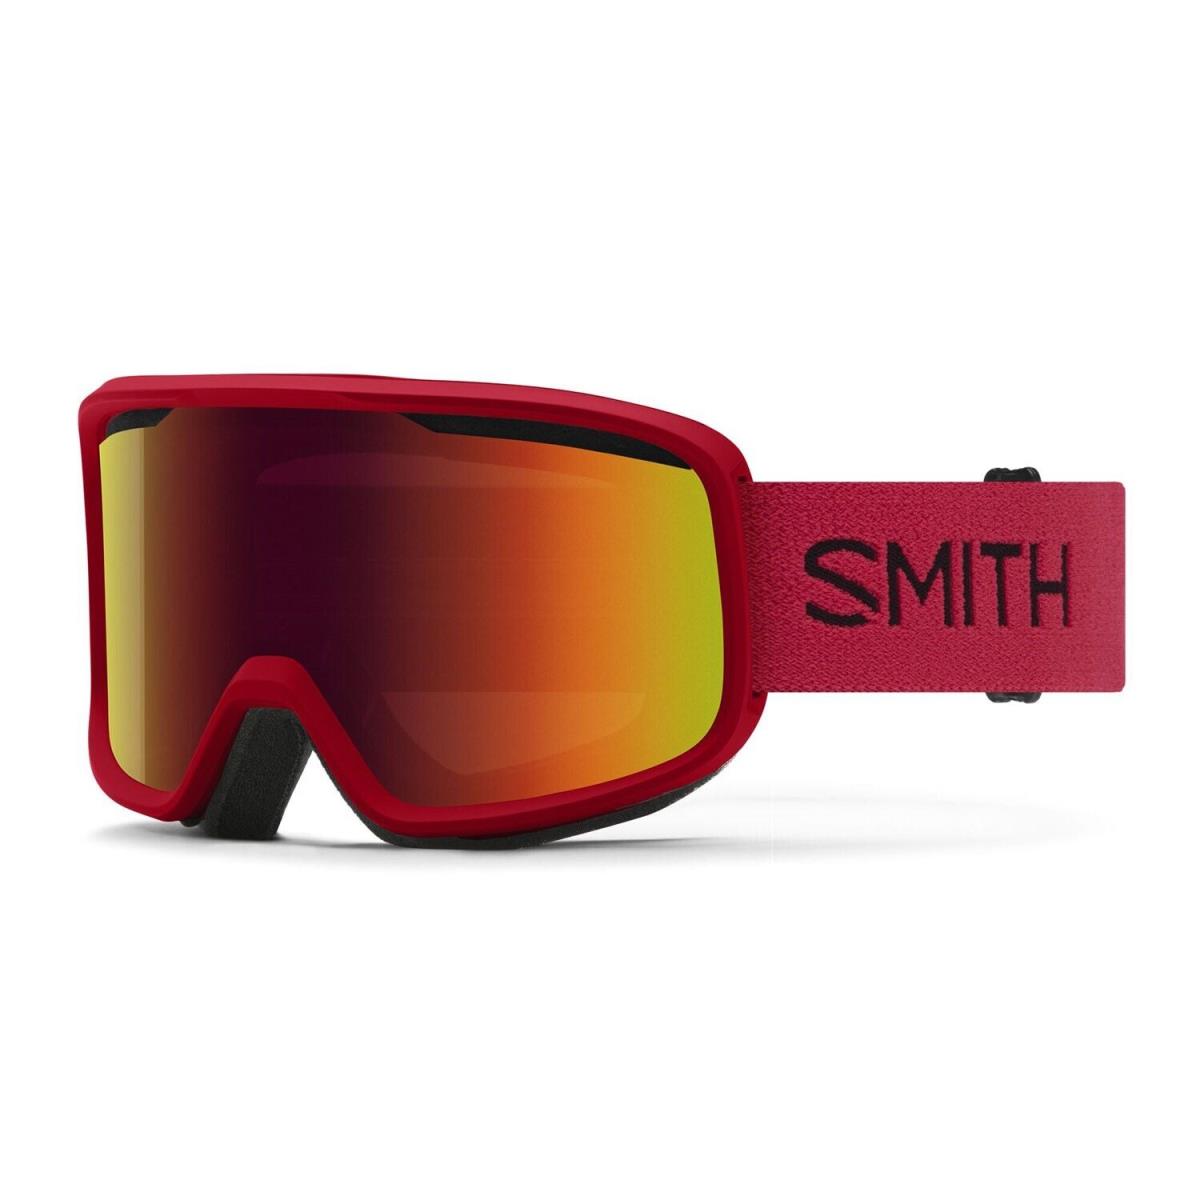 Smith Frontier Ski / Snow Goggles Crimson Frame Red Sol-x Mirror Lens